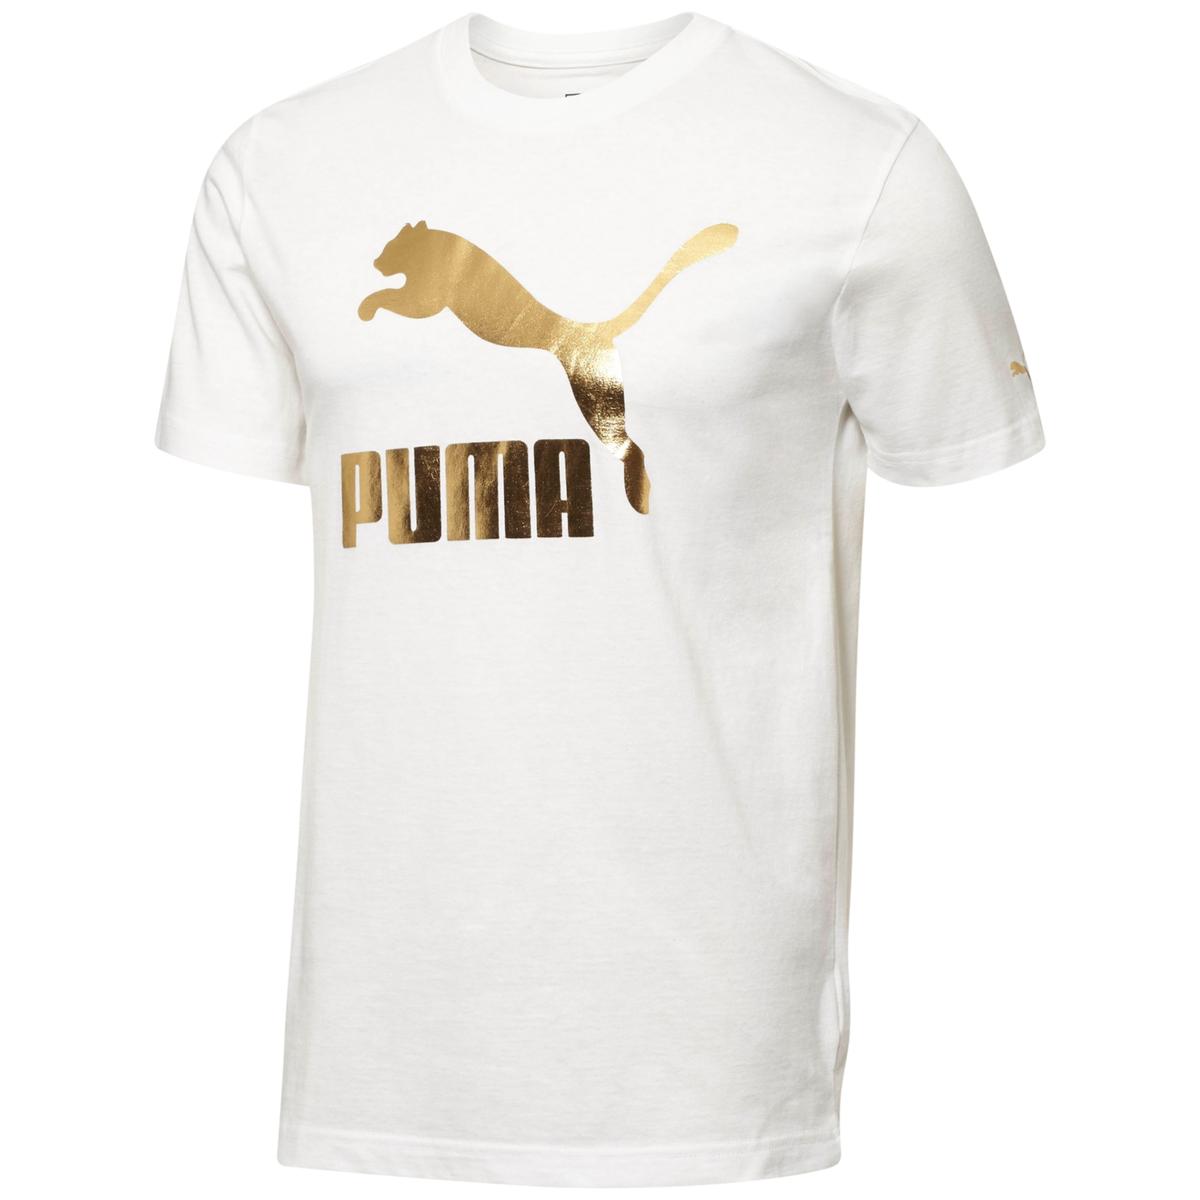 Puma Mens Archive Life Tee White Running Fitness T-Shirt Athletic S BHFO 0122 | eBay